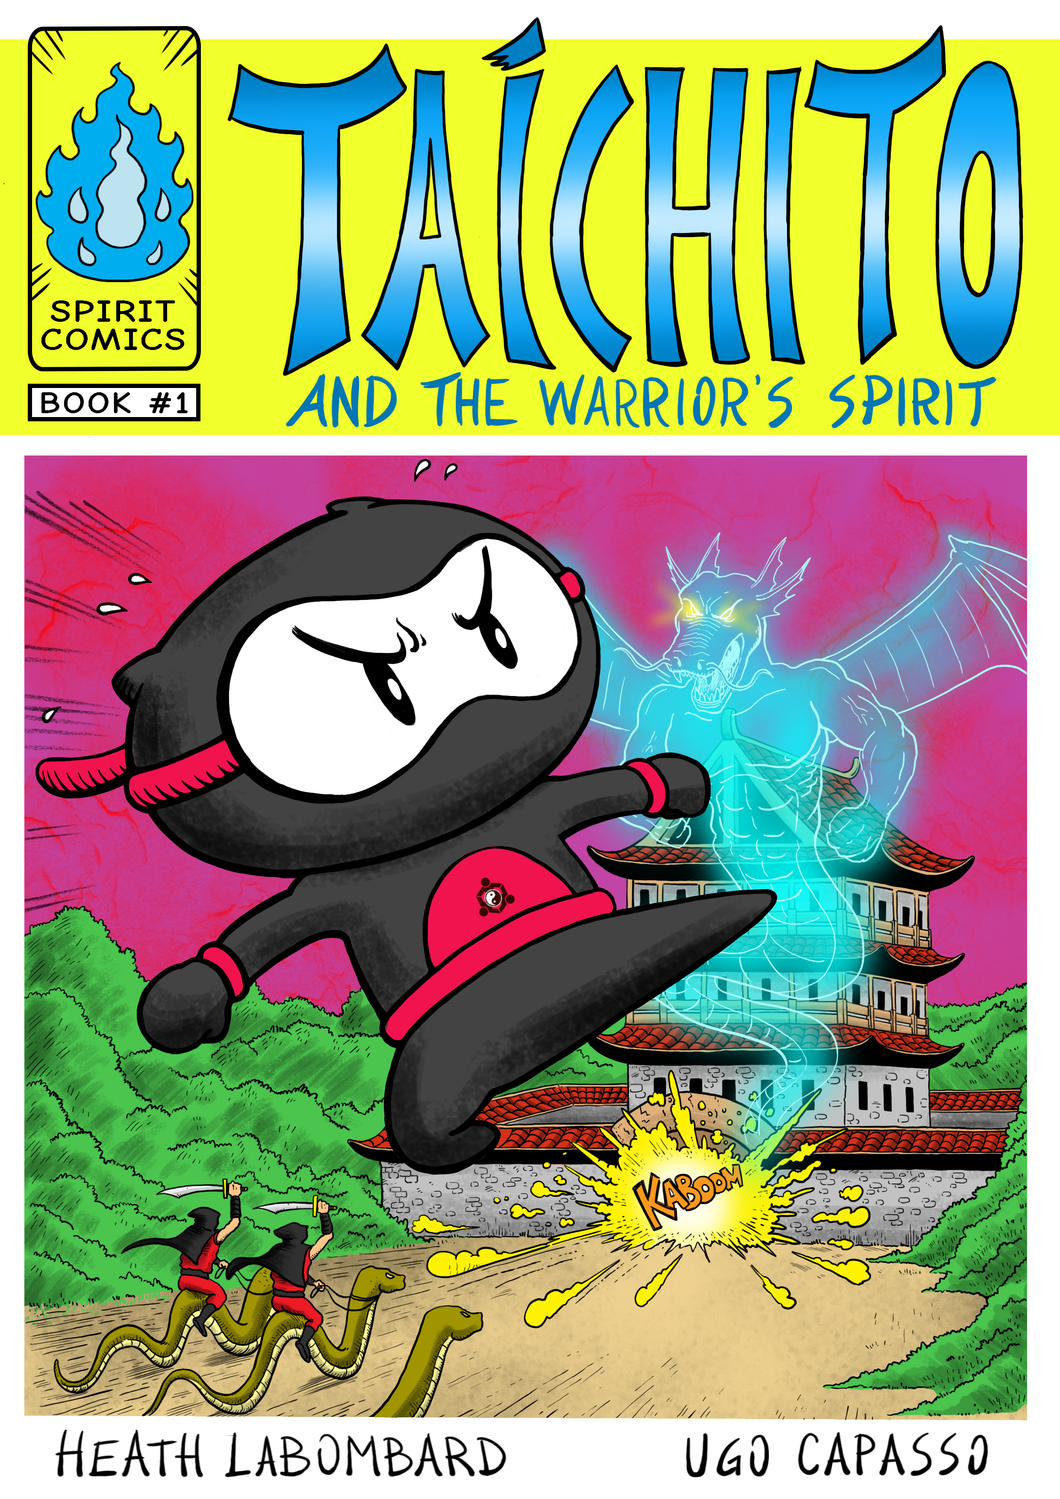 Book 1 - Taichito and the Warrior's Spirit